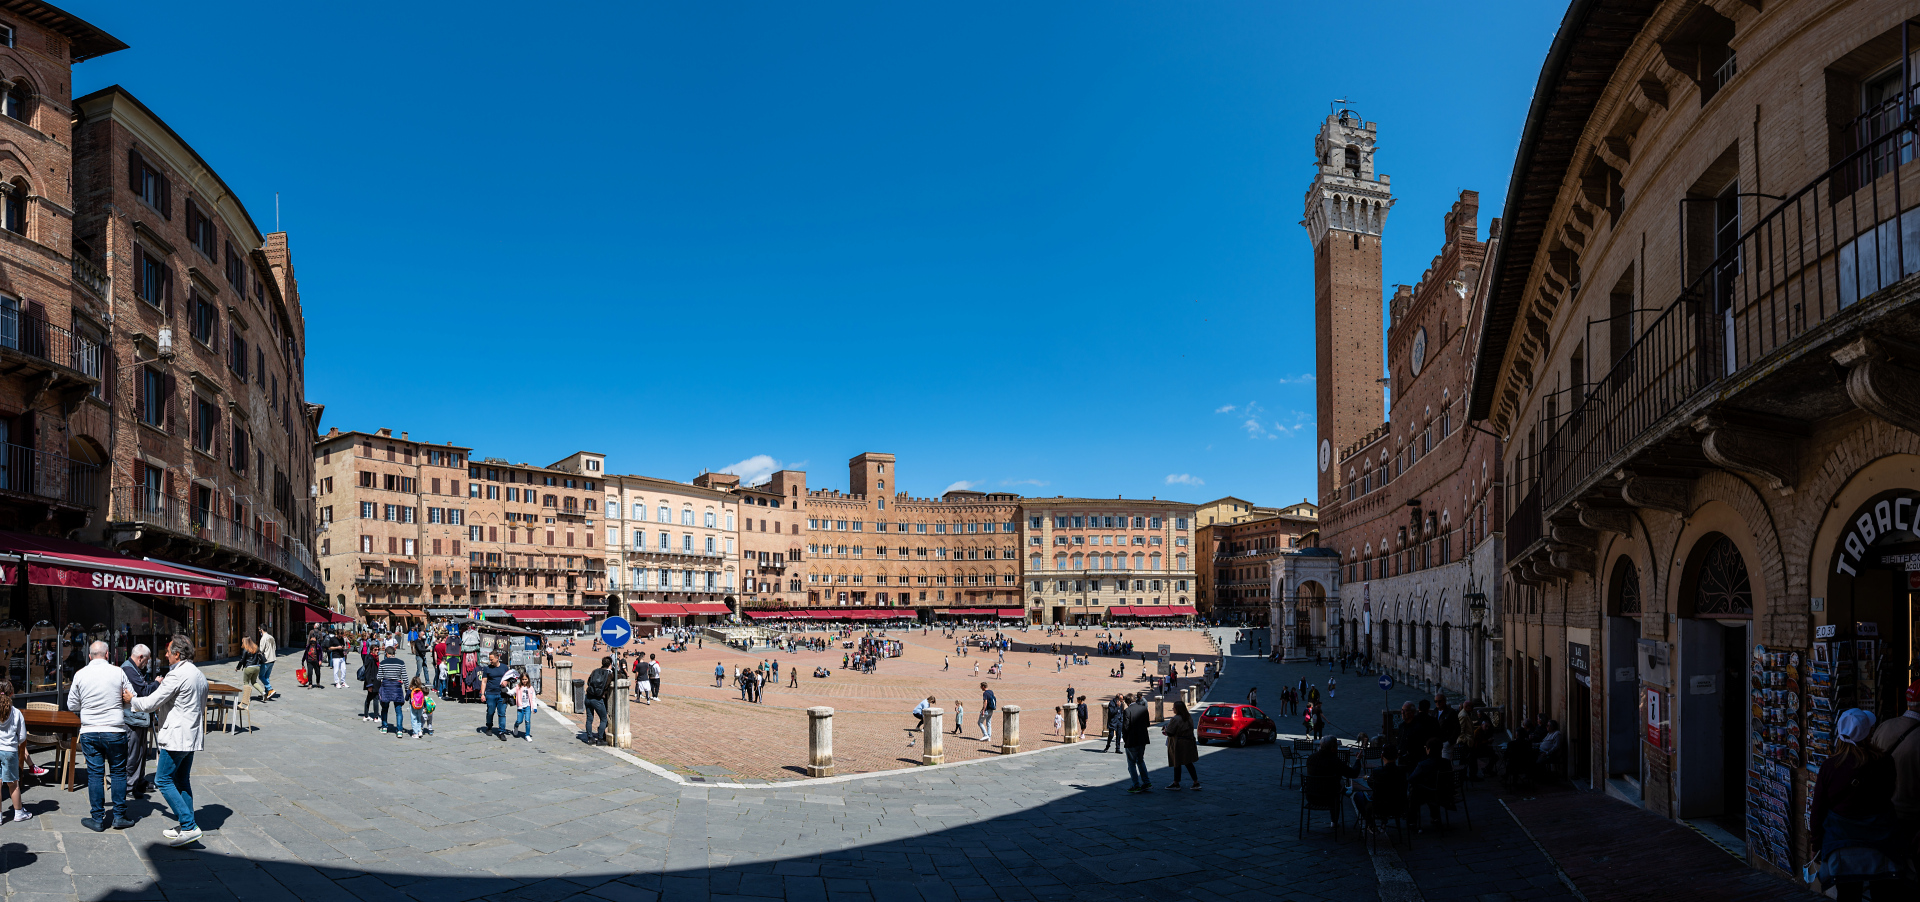 Siena - Piazza del Campo Pano